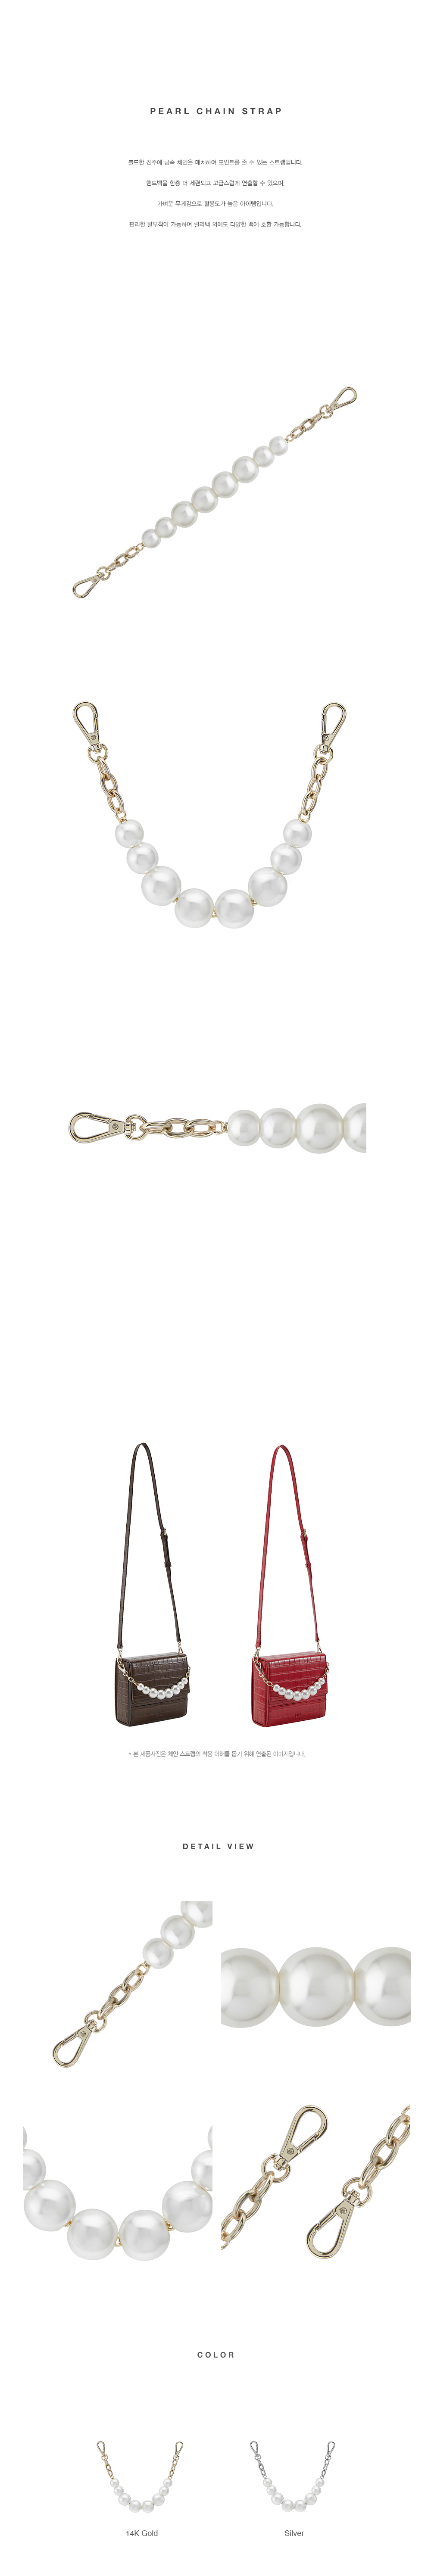 BBYB Pearl Chain strap (14K Gold)